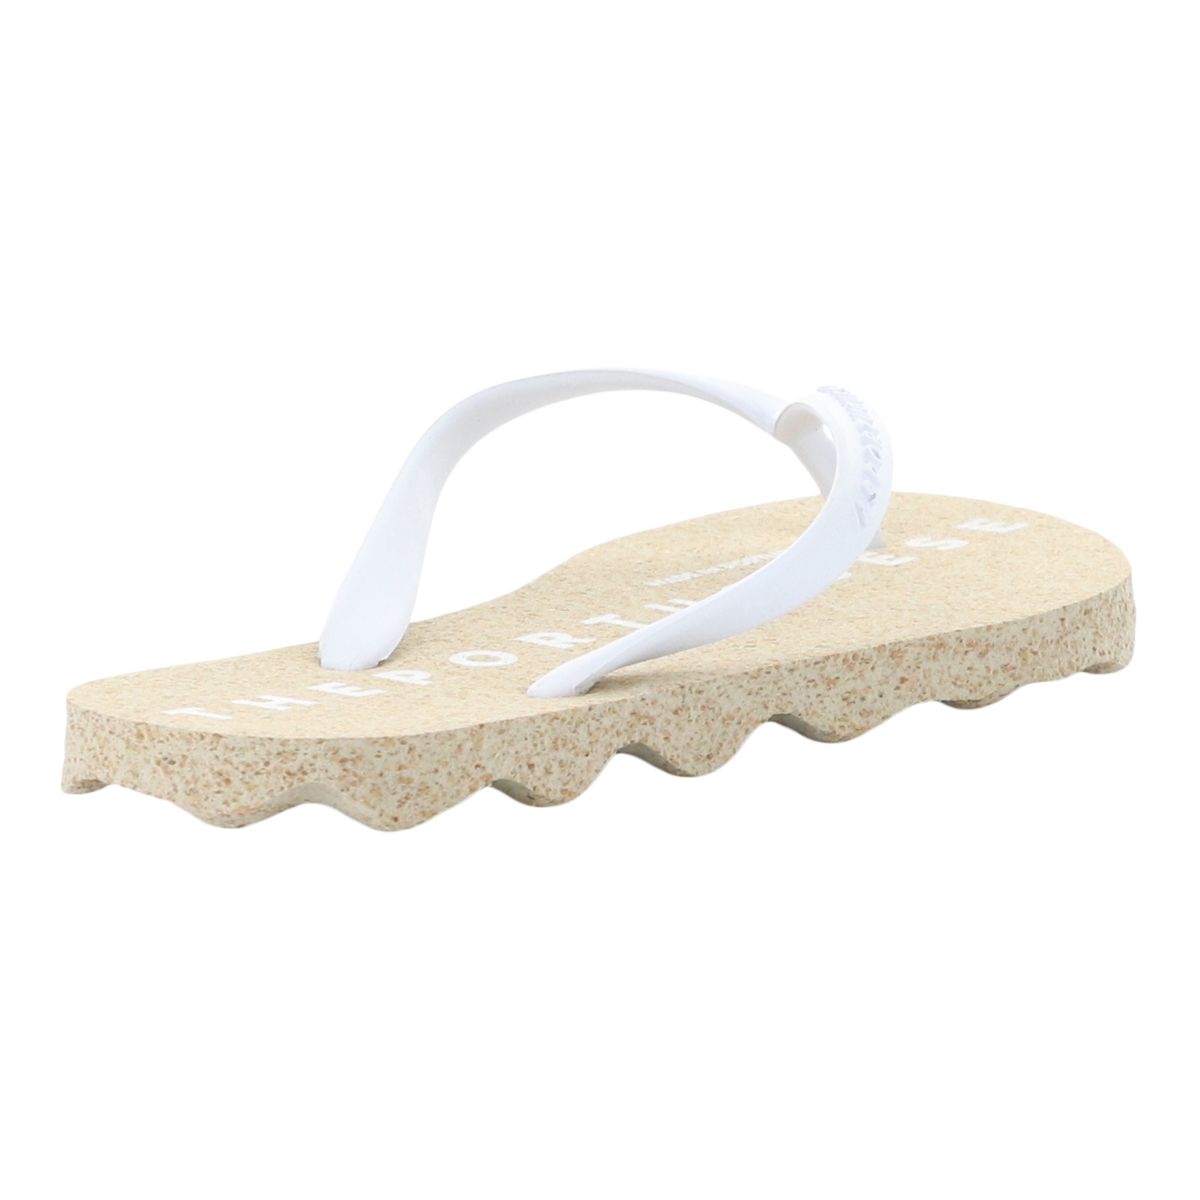  VQLTZQU Memory Foam Flip Flops for Women Size 8